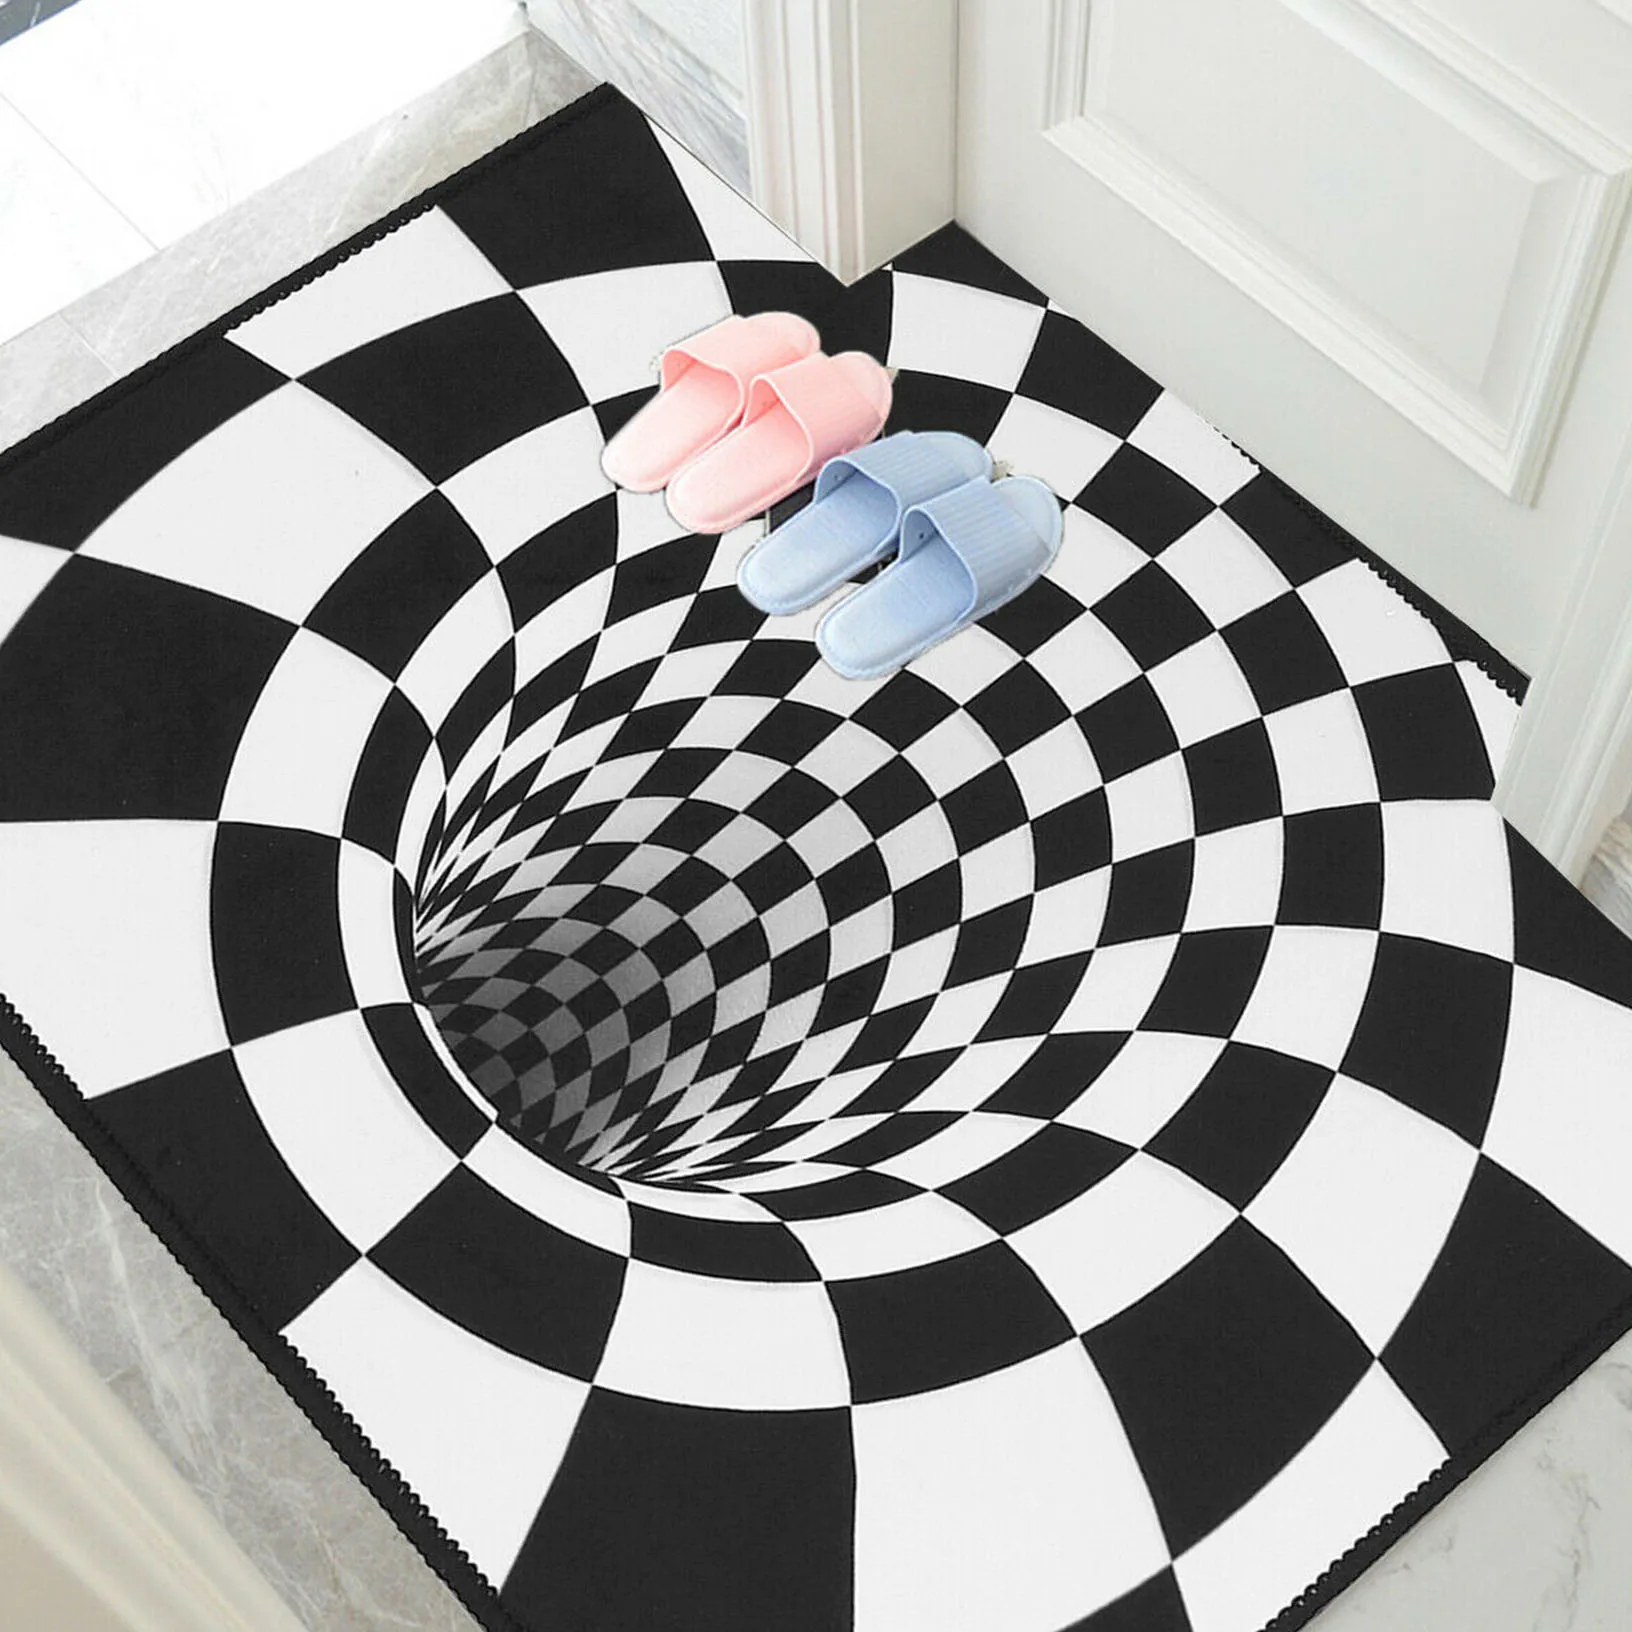 

3D Vortex Visual Illusion Rug Printed Area Rug Carpet Floor Pad Non-slip Doormat For Living room Blanket Home Decor